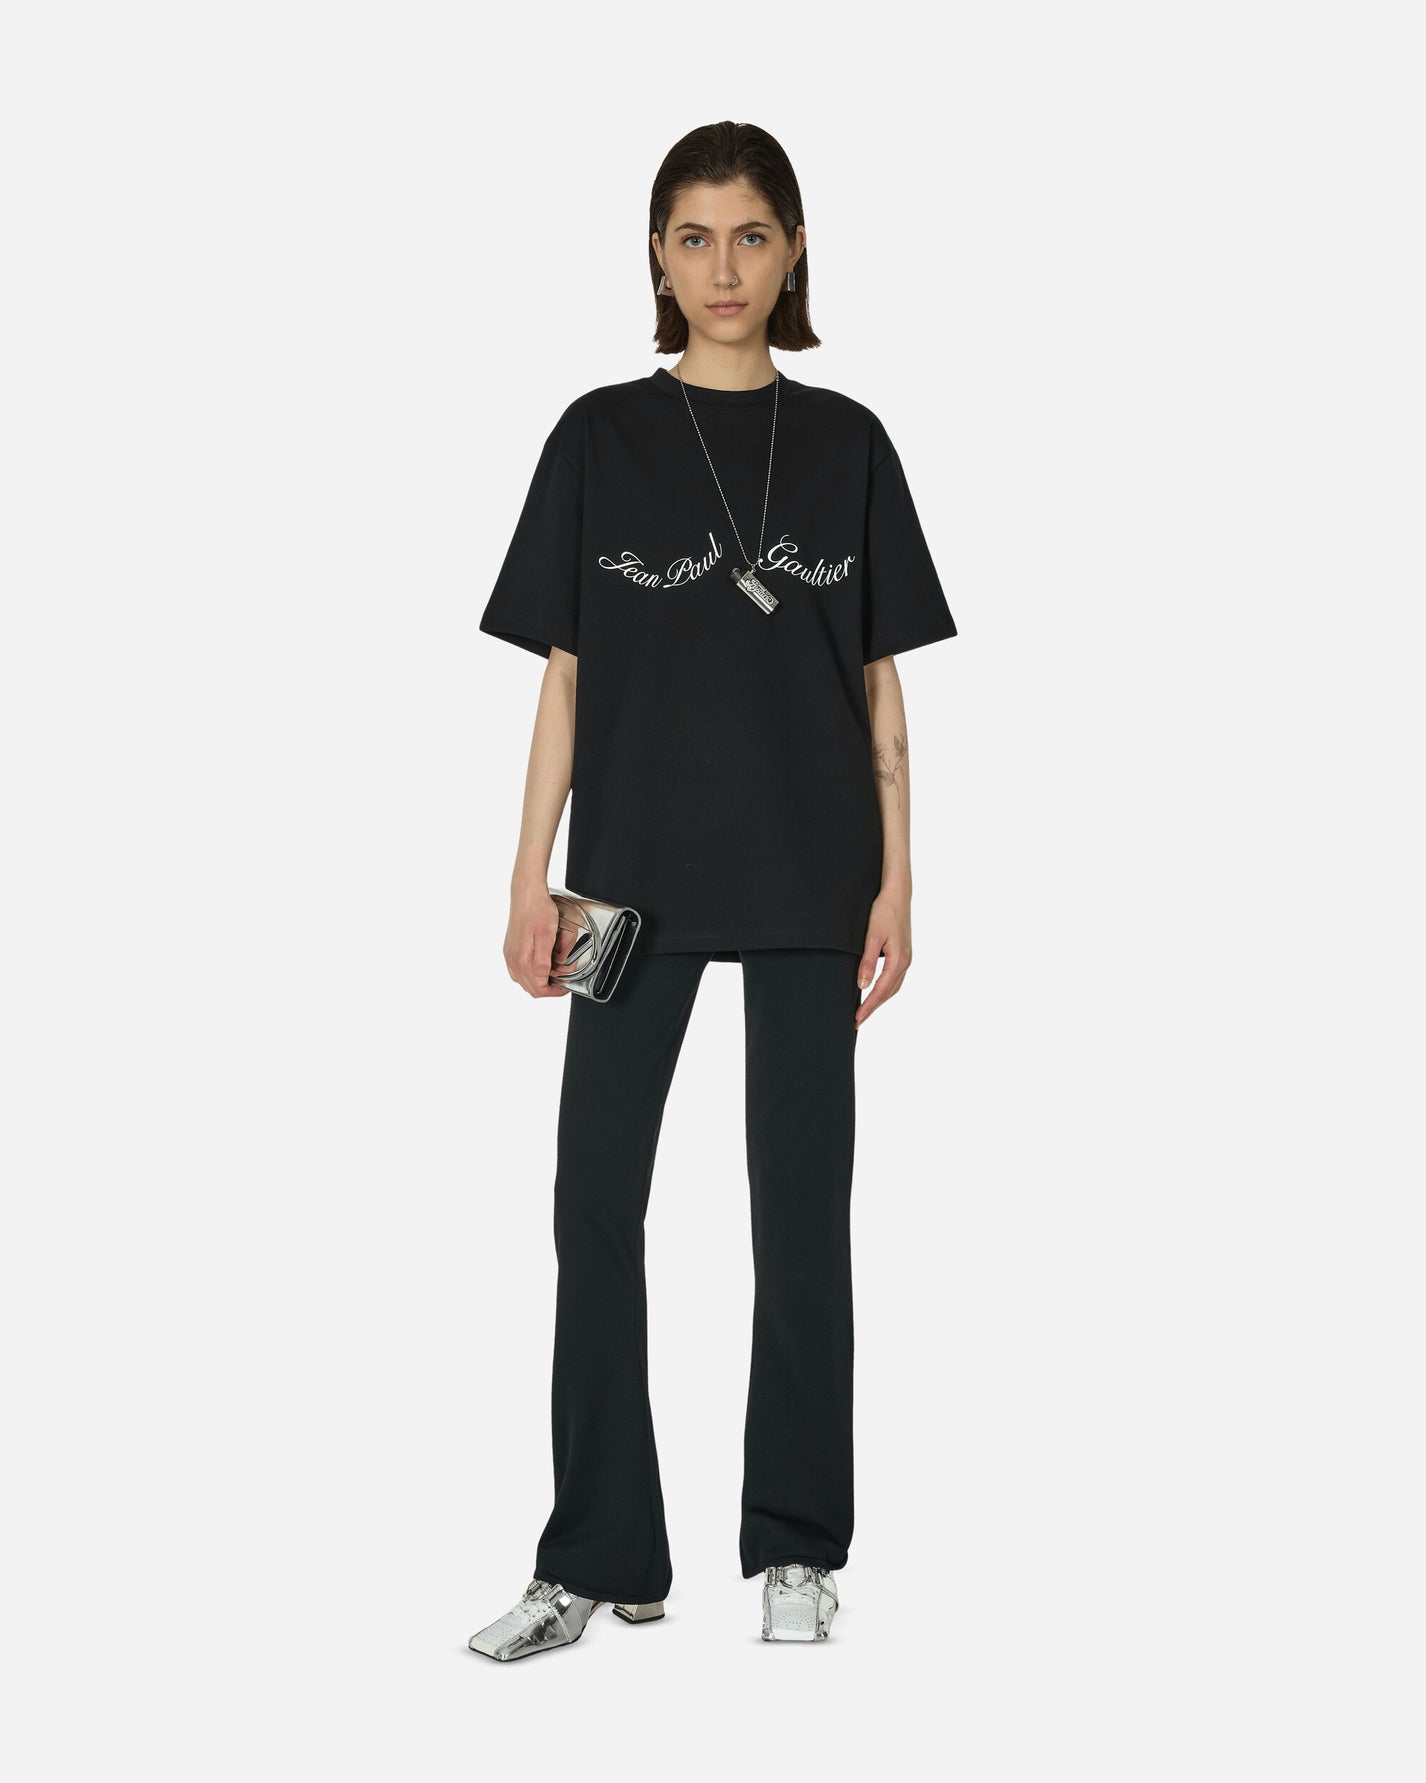 Jean Paul Gaultier Wmns Crewneck Cotton Oversize Tee-Shirt Black/White T-Shirts Shortsleeve TS083I-J055 001